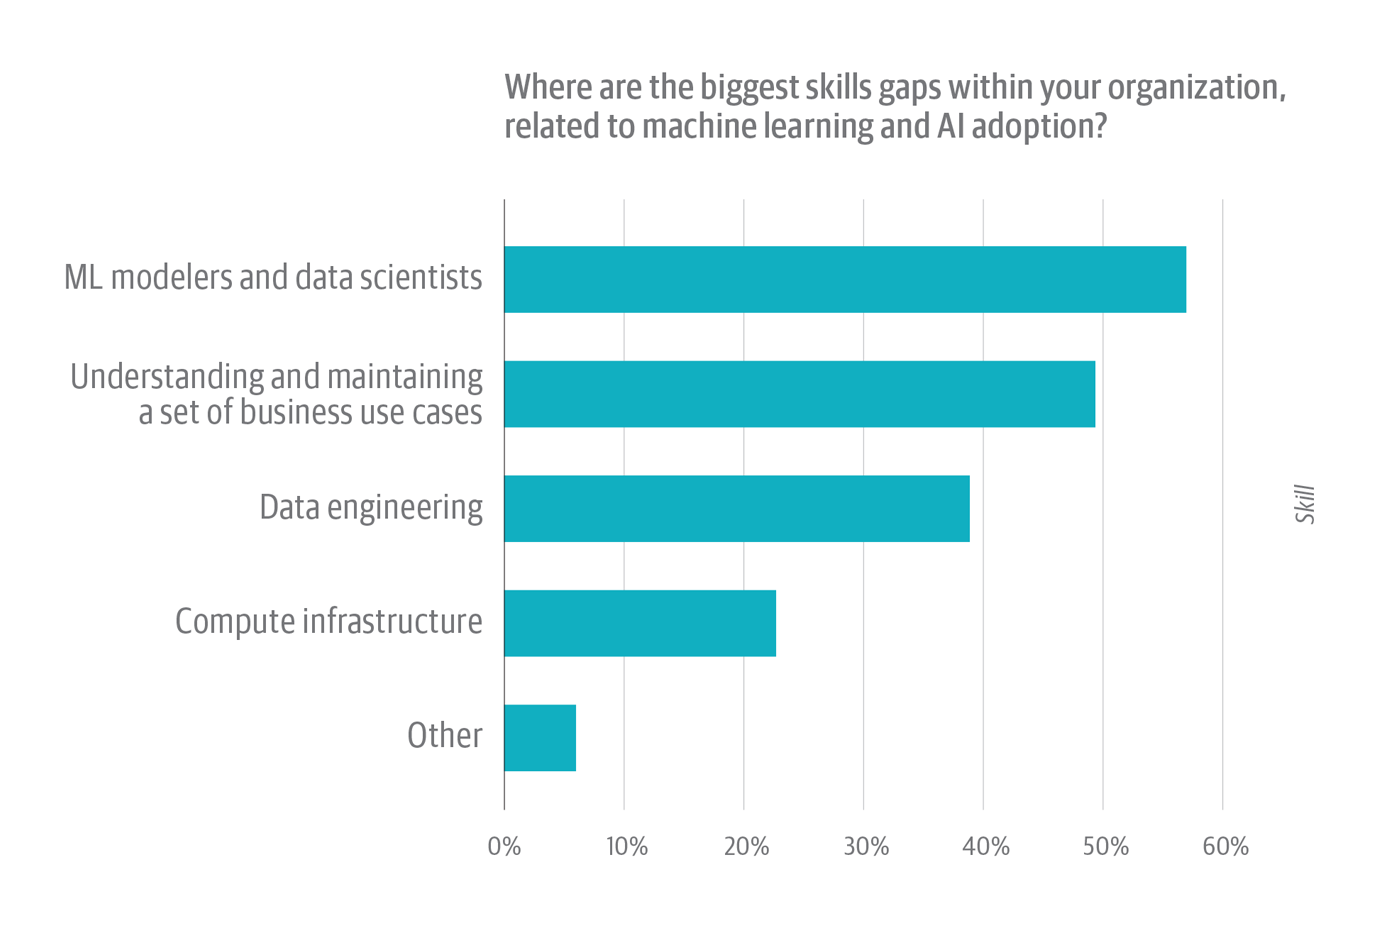 AI/ML skills gaps within organizations